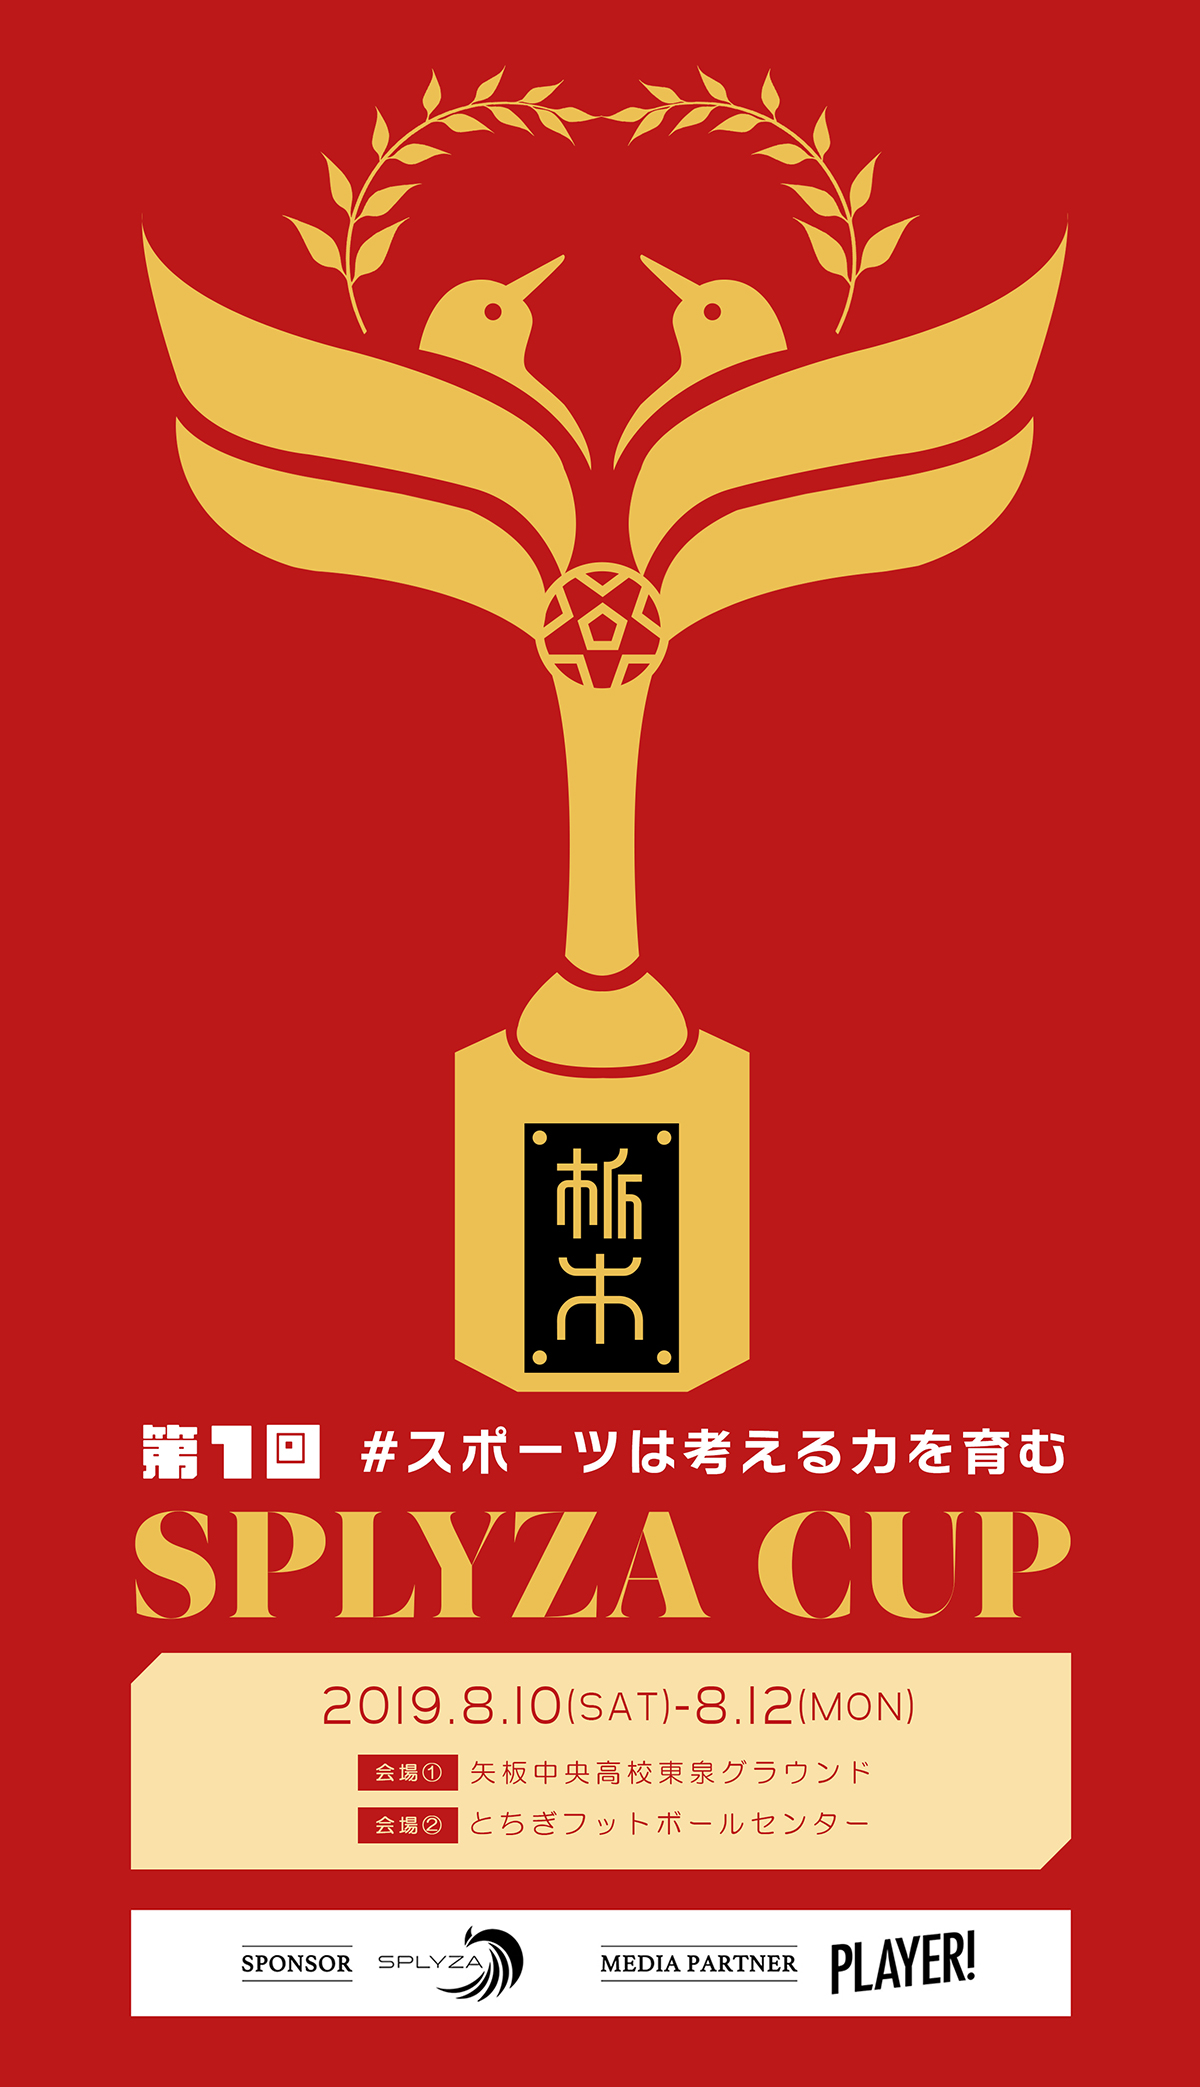 SPLYZA CUP